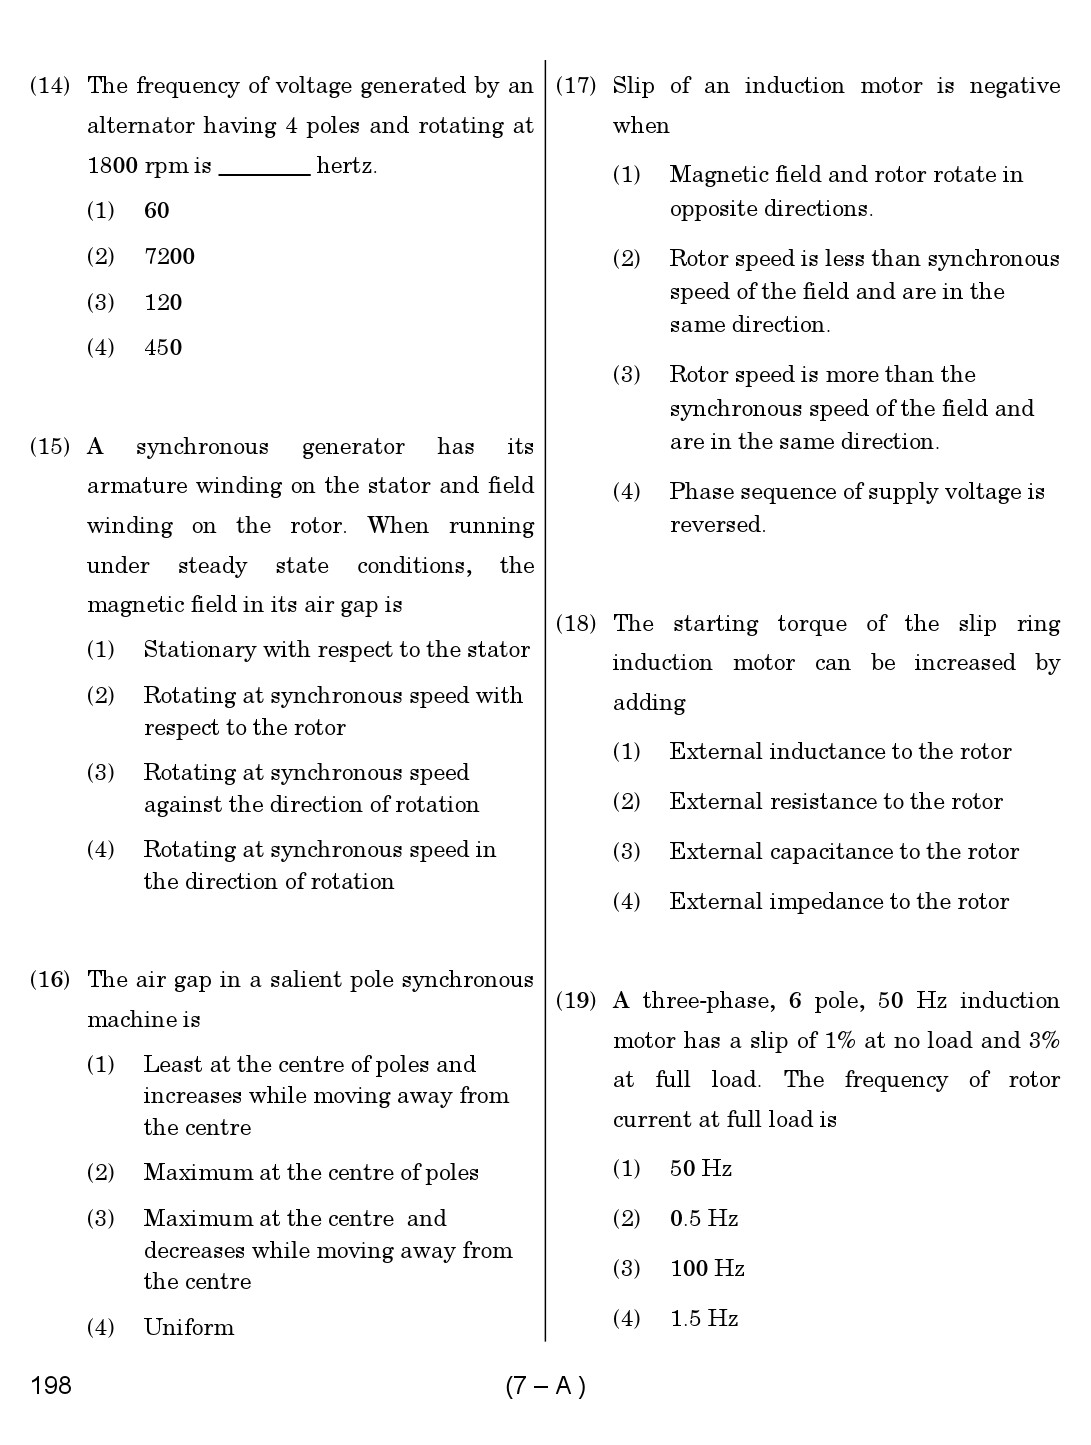 Karnataka PSC Junior Engineer Electrical Exam Sample Question Paper 7